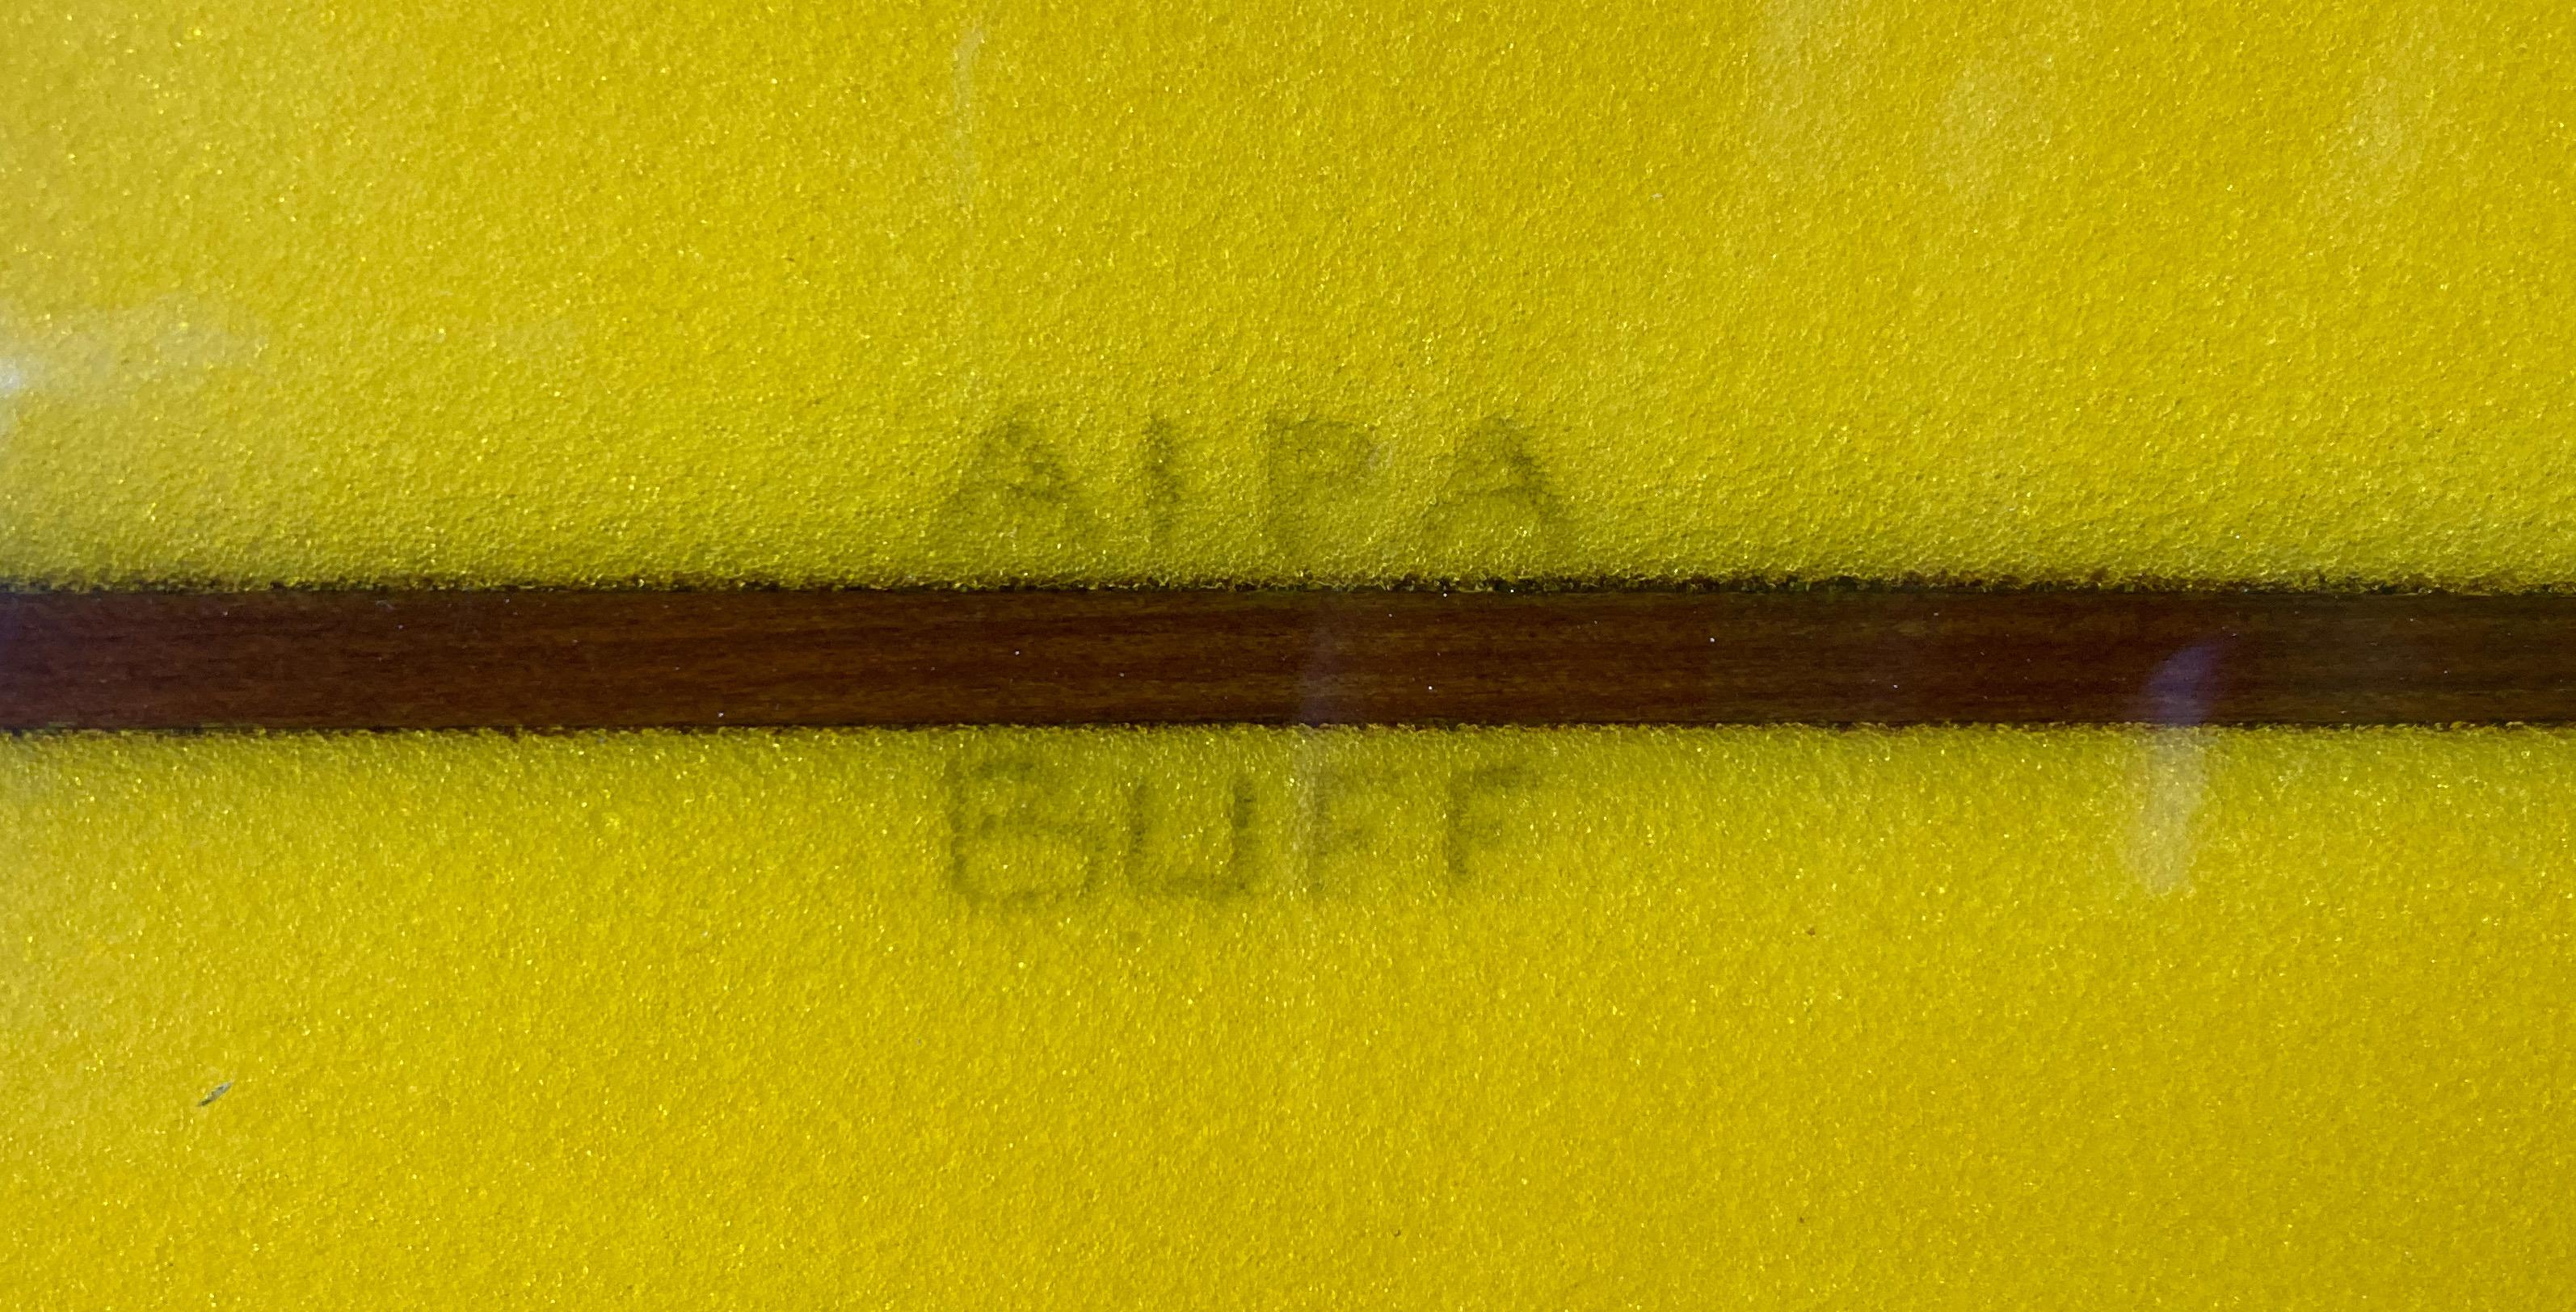 American 1969, Buffalo Keaulana personal surfboard by Ben Aipa Greg Noll SurfCenter 